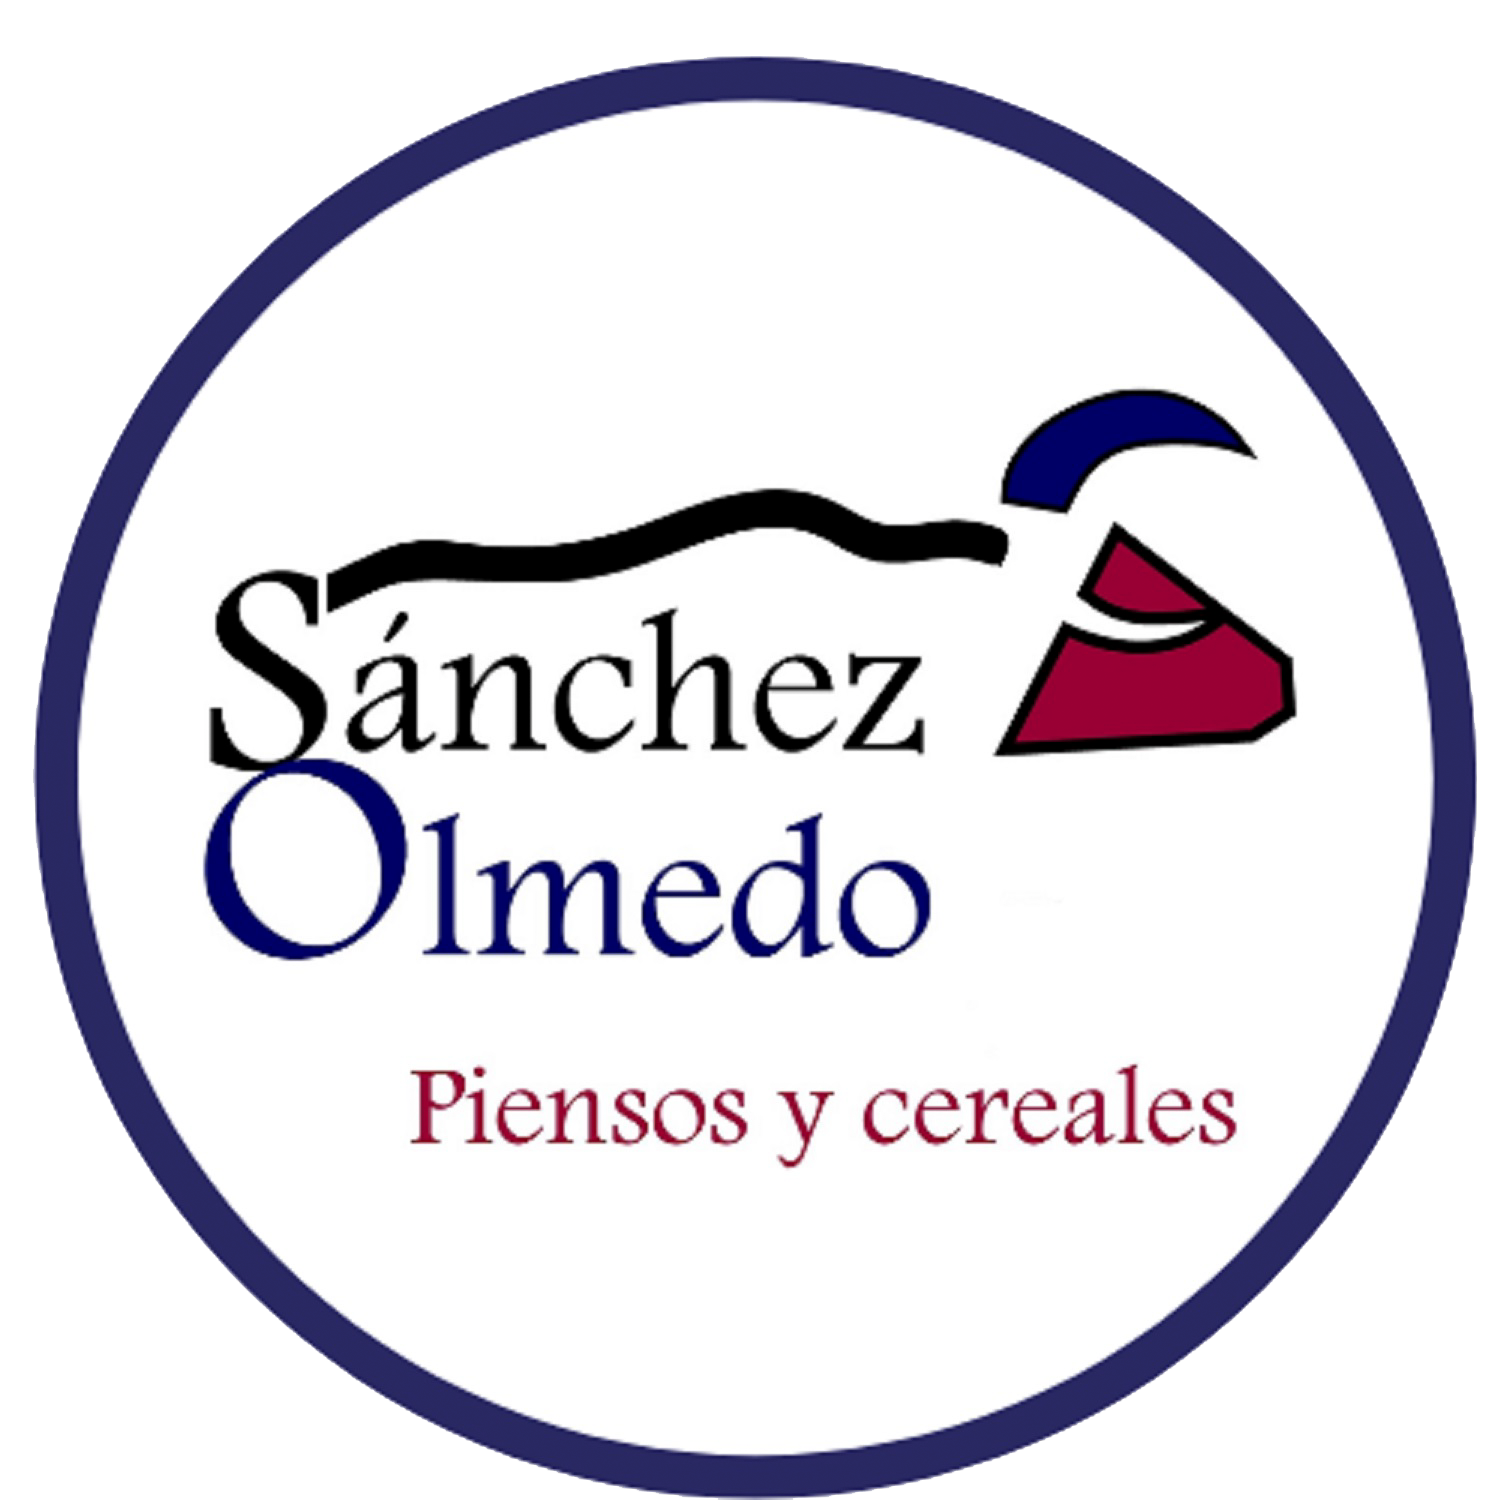 Sanchez Olmedo